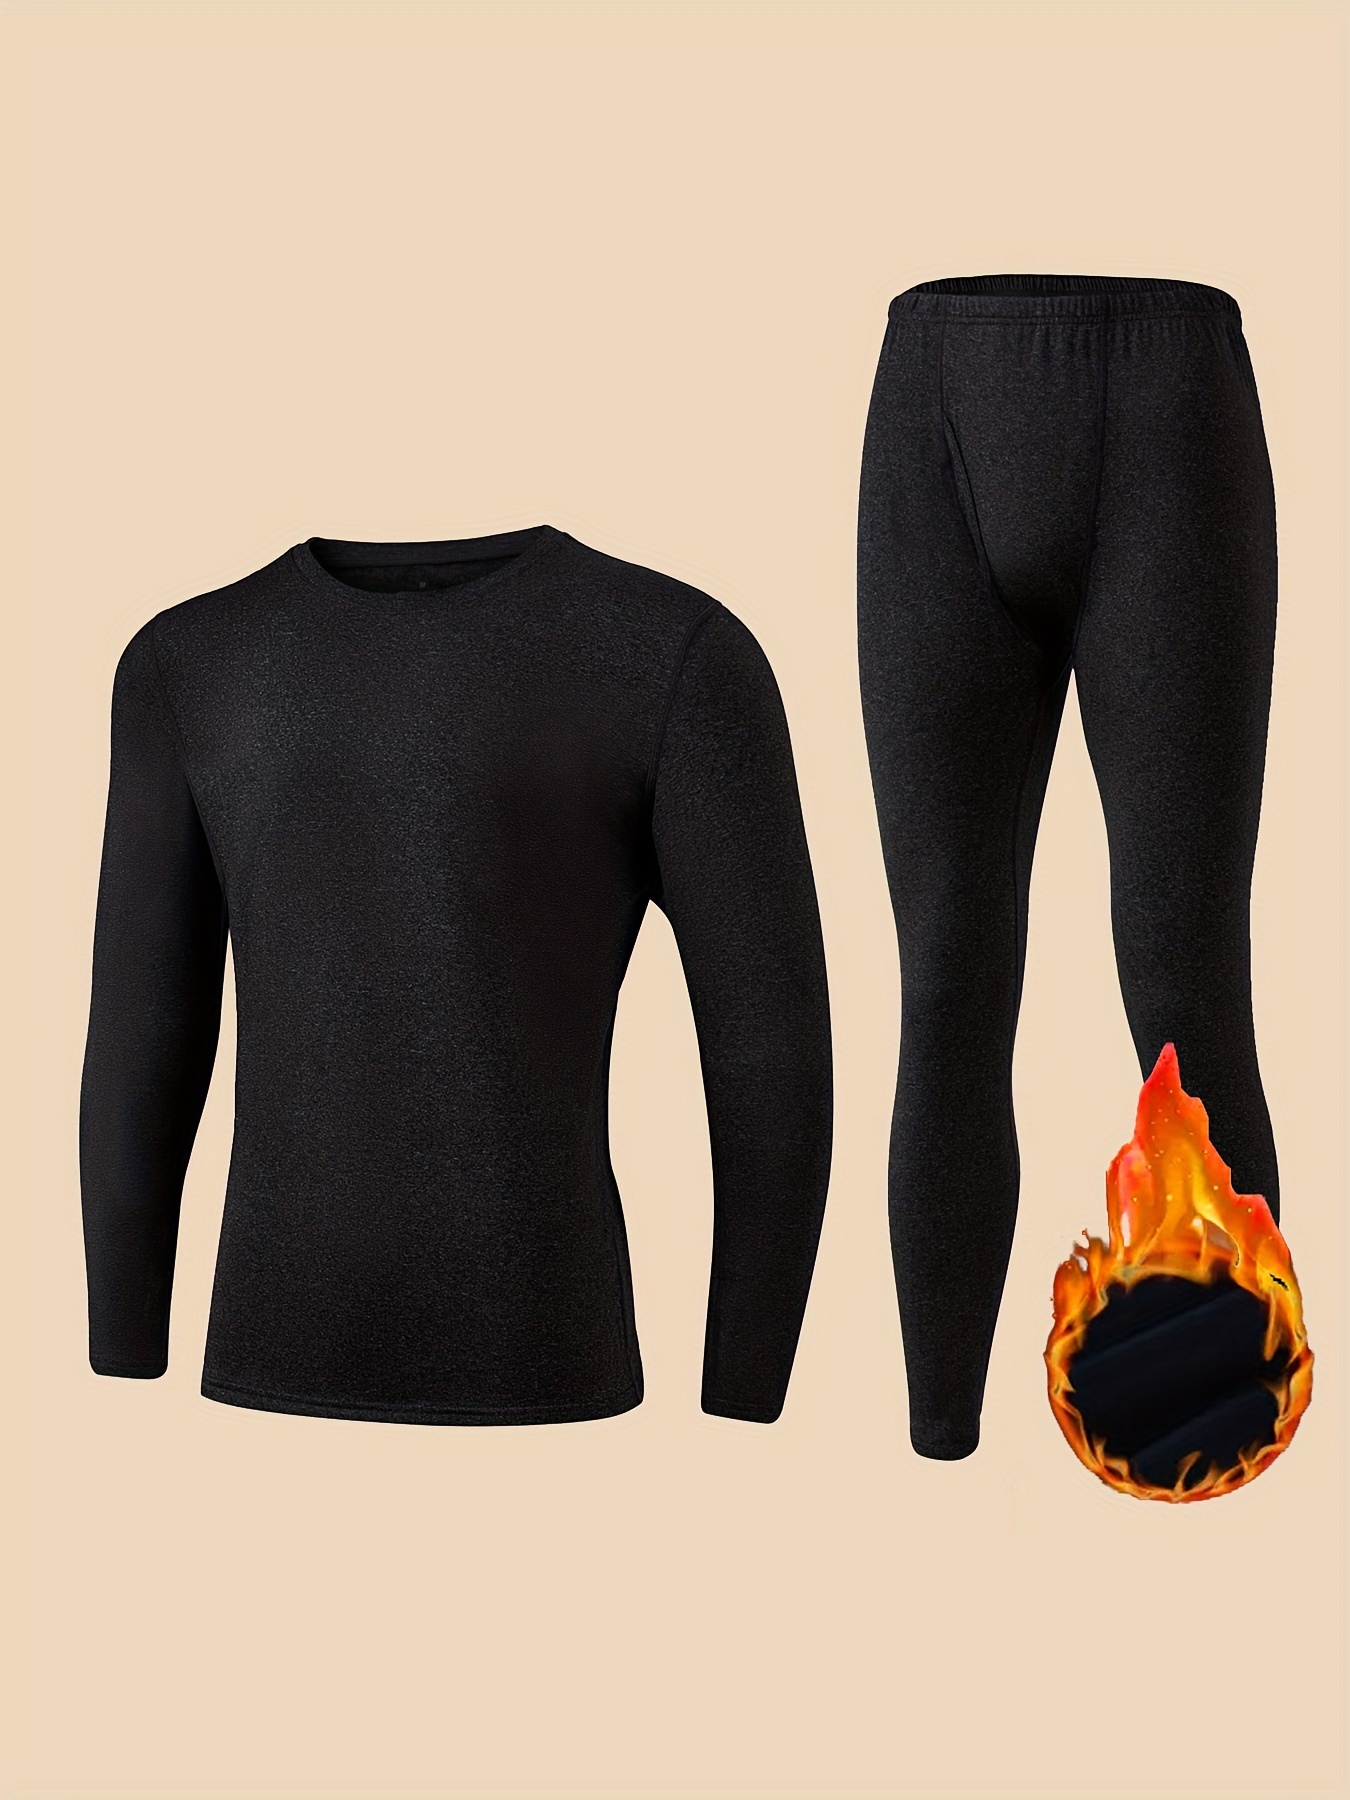 Conjunto de ropa interior térmica para hombre, pantalones largos suaves y  cálidos para hombre, capa base térmica para clima frío